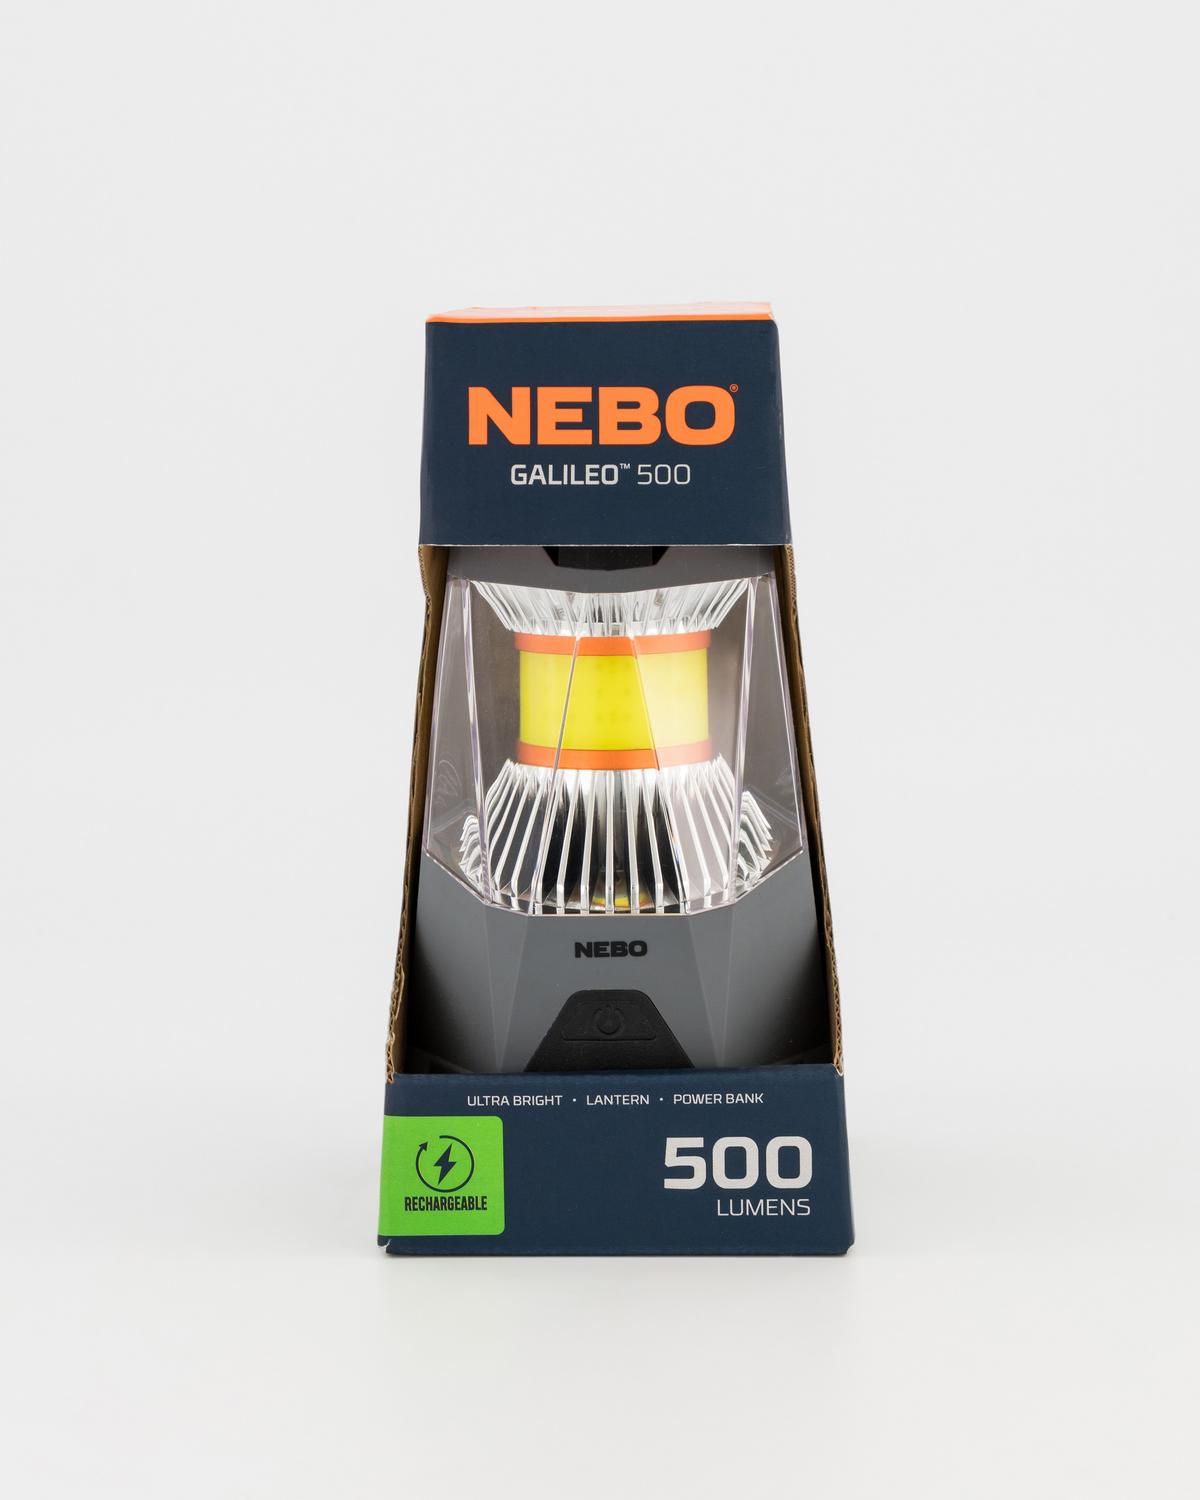 Nebo Galileo™ 500 Lumen Lantern -  Black